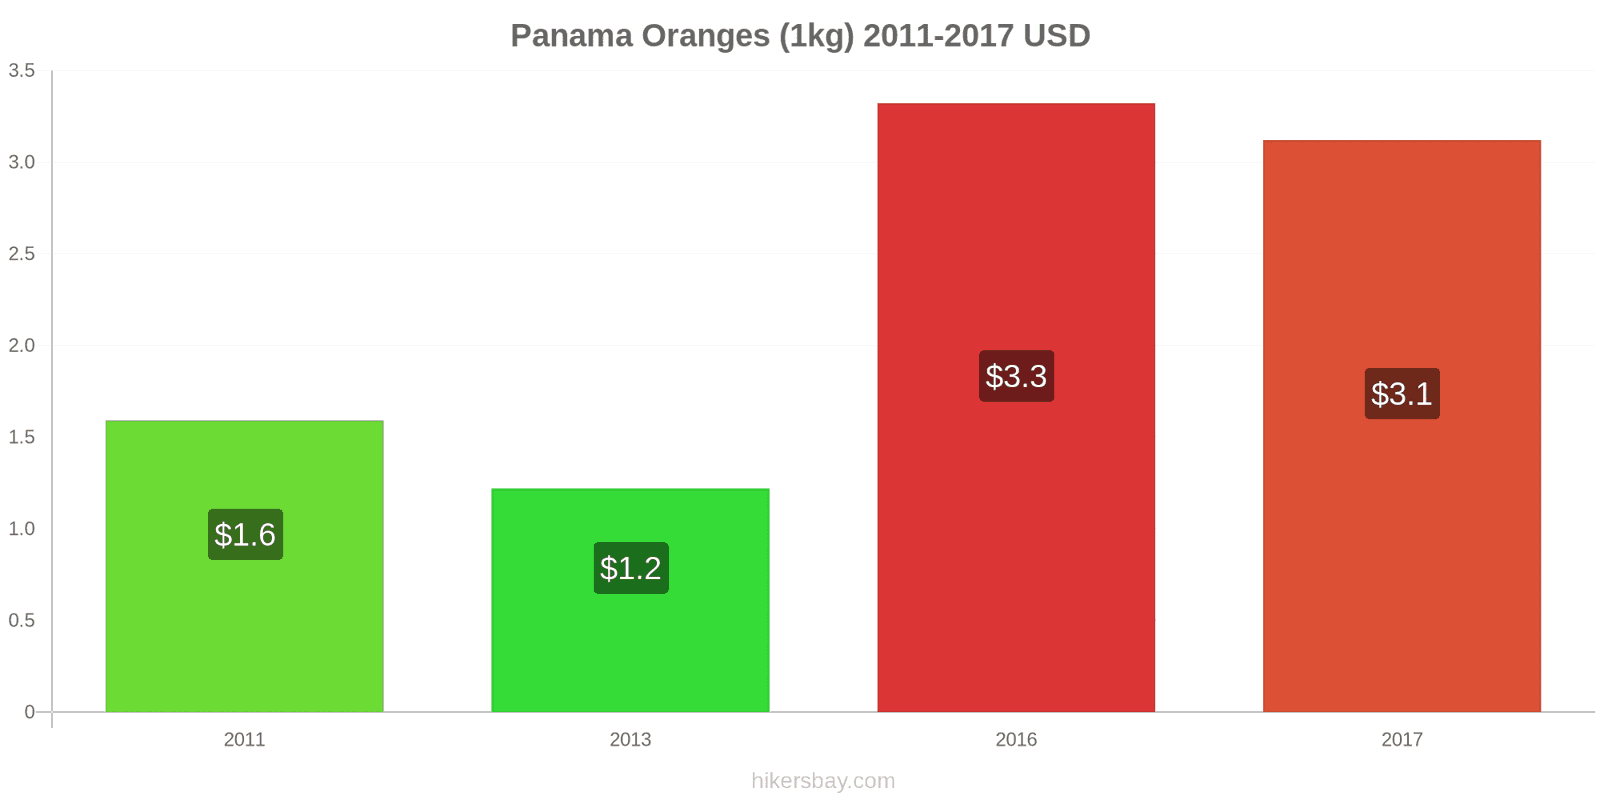 Panama price changes Oranges (1kg) hikersbay.com